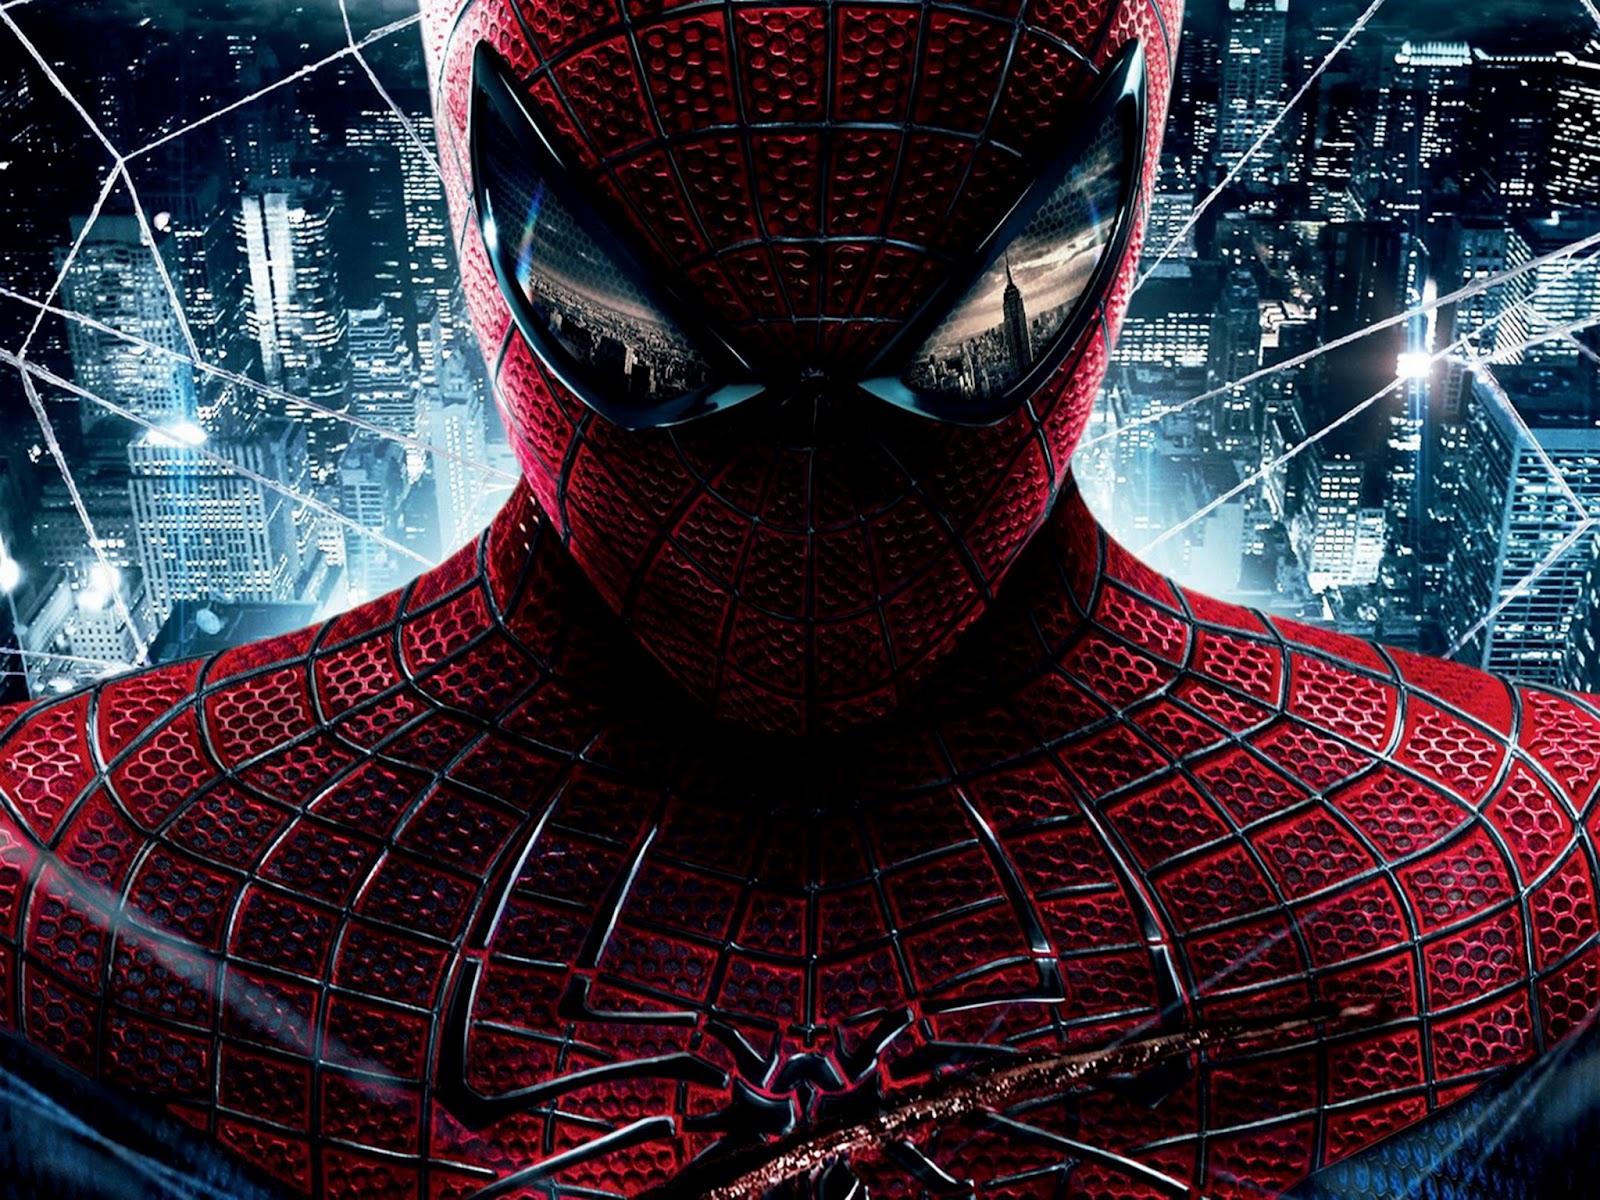 https://blogger.googleusercontent.com/img/b/R29vZ2xl/AVvXsEgwmNjpLbq1TQqy99zXpttKsYS7BZi3bAZMJHu8oTjD3AitdbbEiUZ7M6vtn284ZEzAgXrscOa4zEEcpGwt86Qgt1JwJIzuHM89XKtvHXCZkygztQK1lXxz5-I_Tv-iPXxN055NFJfLXJ4j/s1600/The-Amazing-Spider-Man-Wallpaper-5.jpg